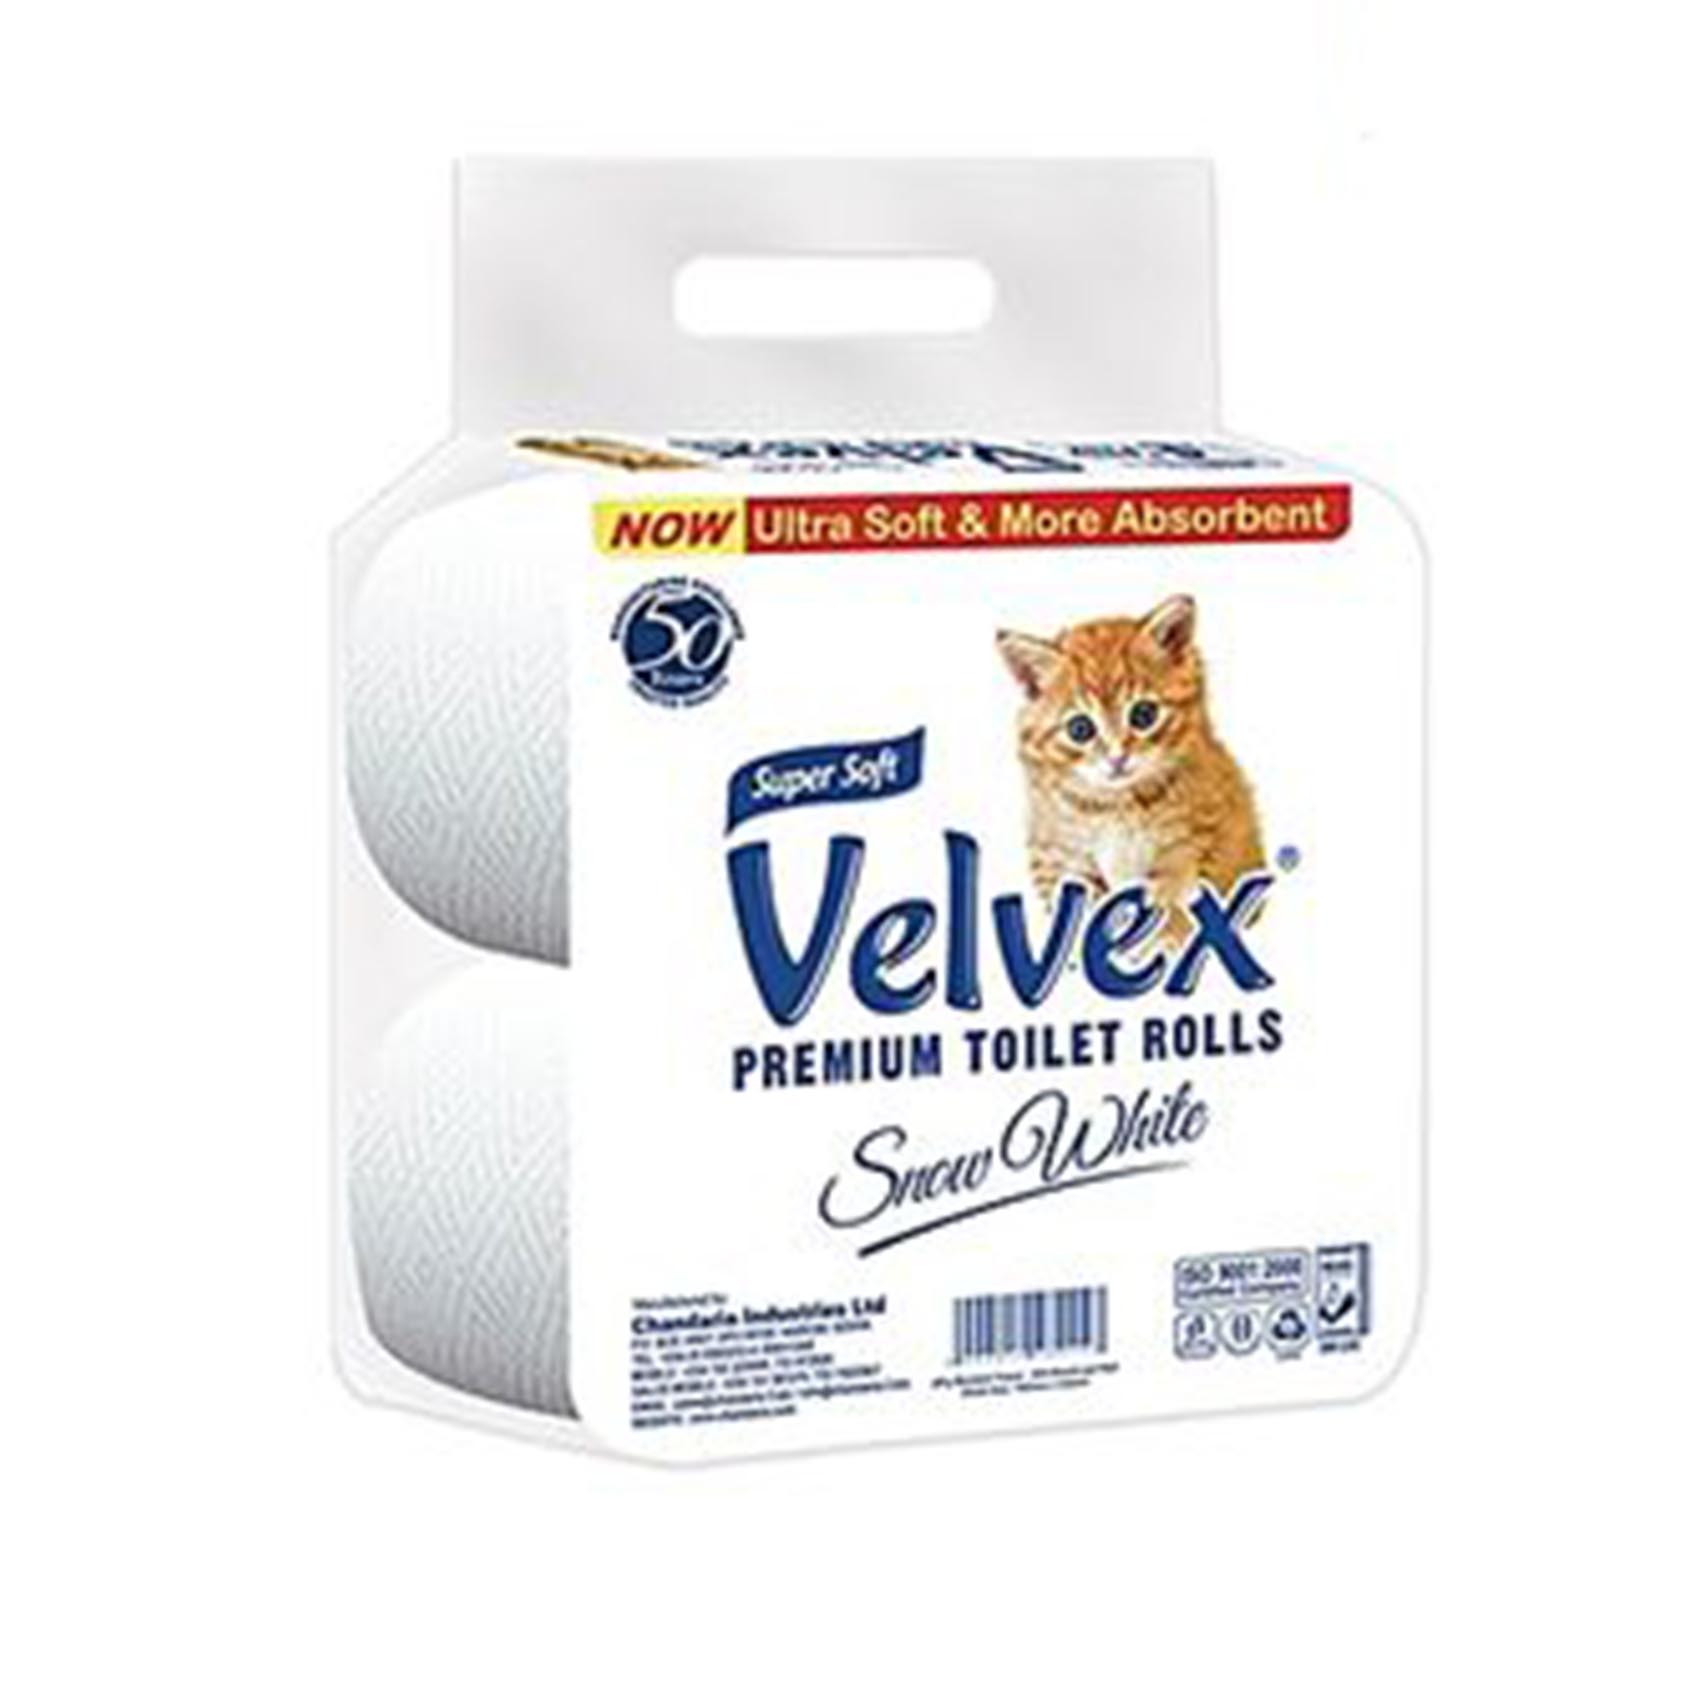 Velvex White Toilet Rolls x 4